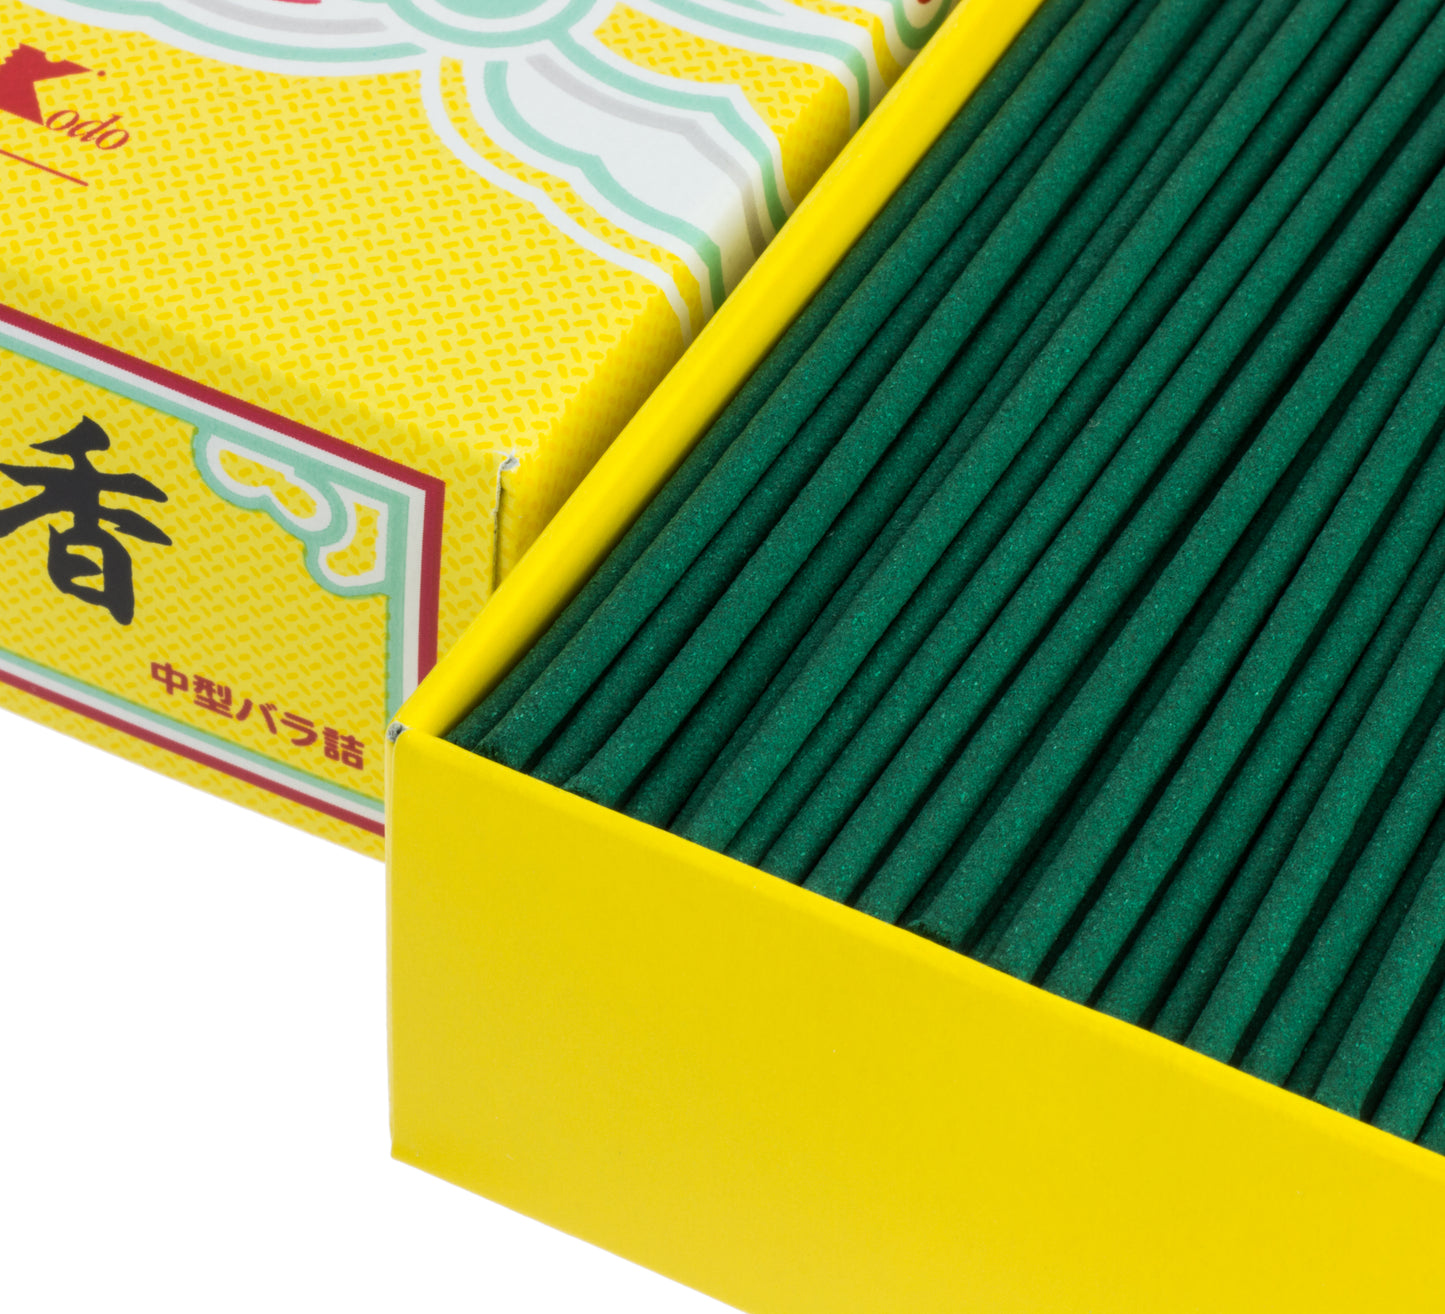 Mainichikoh Viva Incense - Large Box